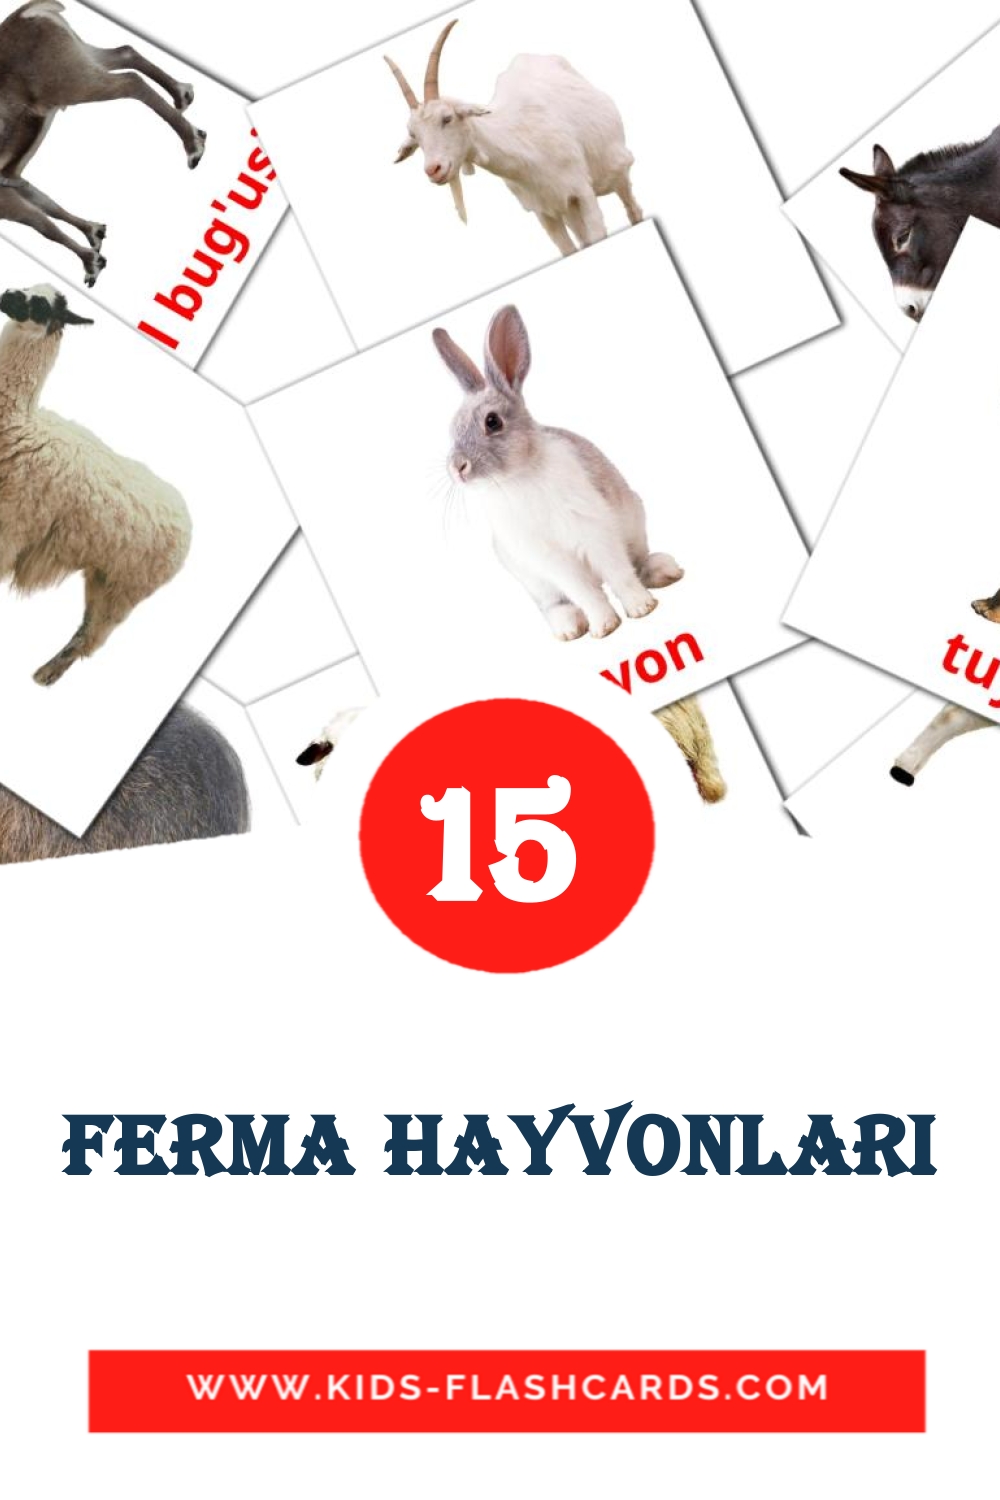 15 Ferma hayvonlari Picture Cards for Kindergarden in uzbek